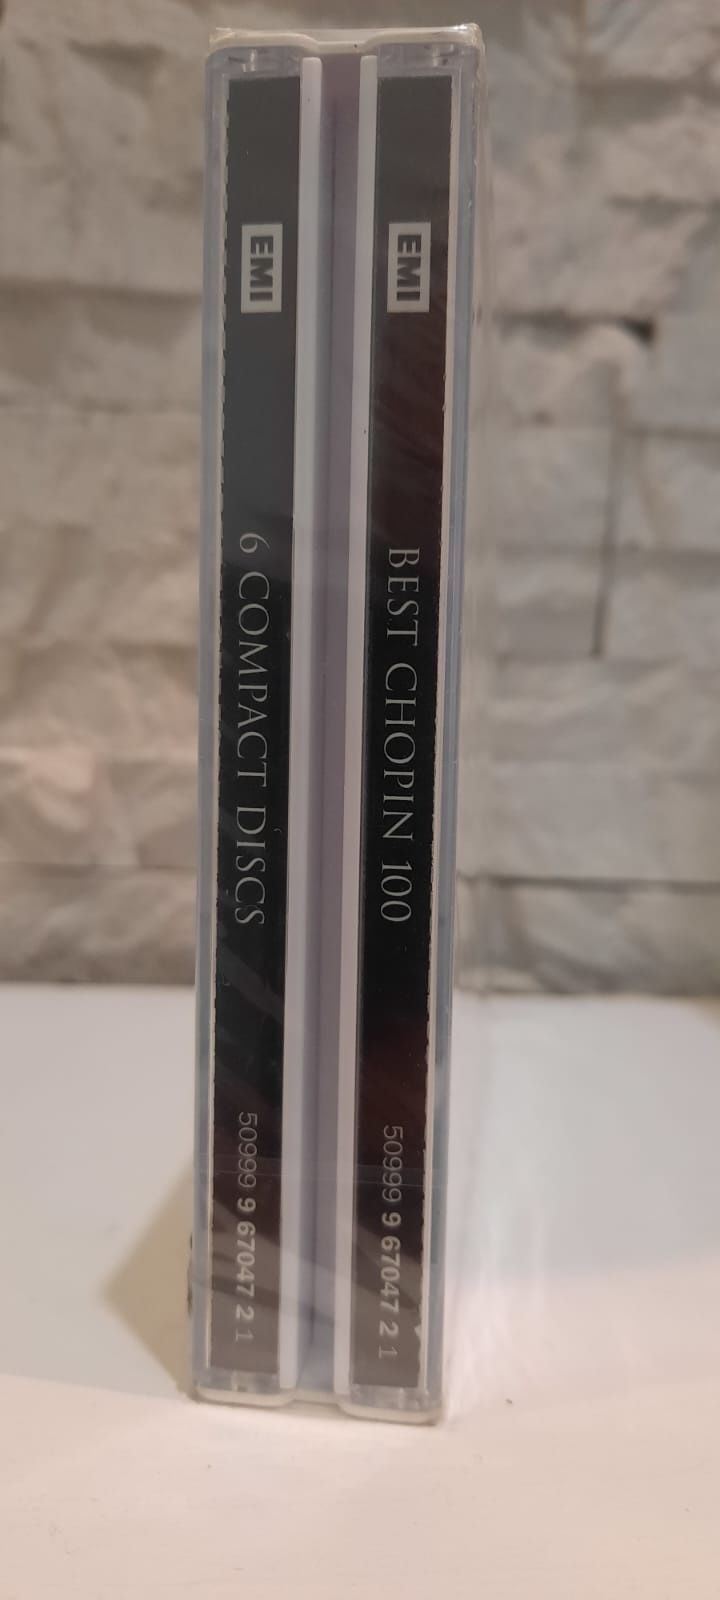 Chopin zestaw 6 płyt CD kolekcja